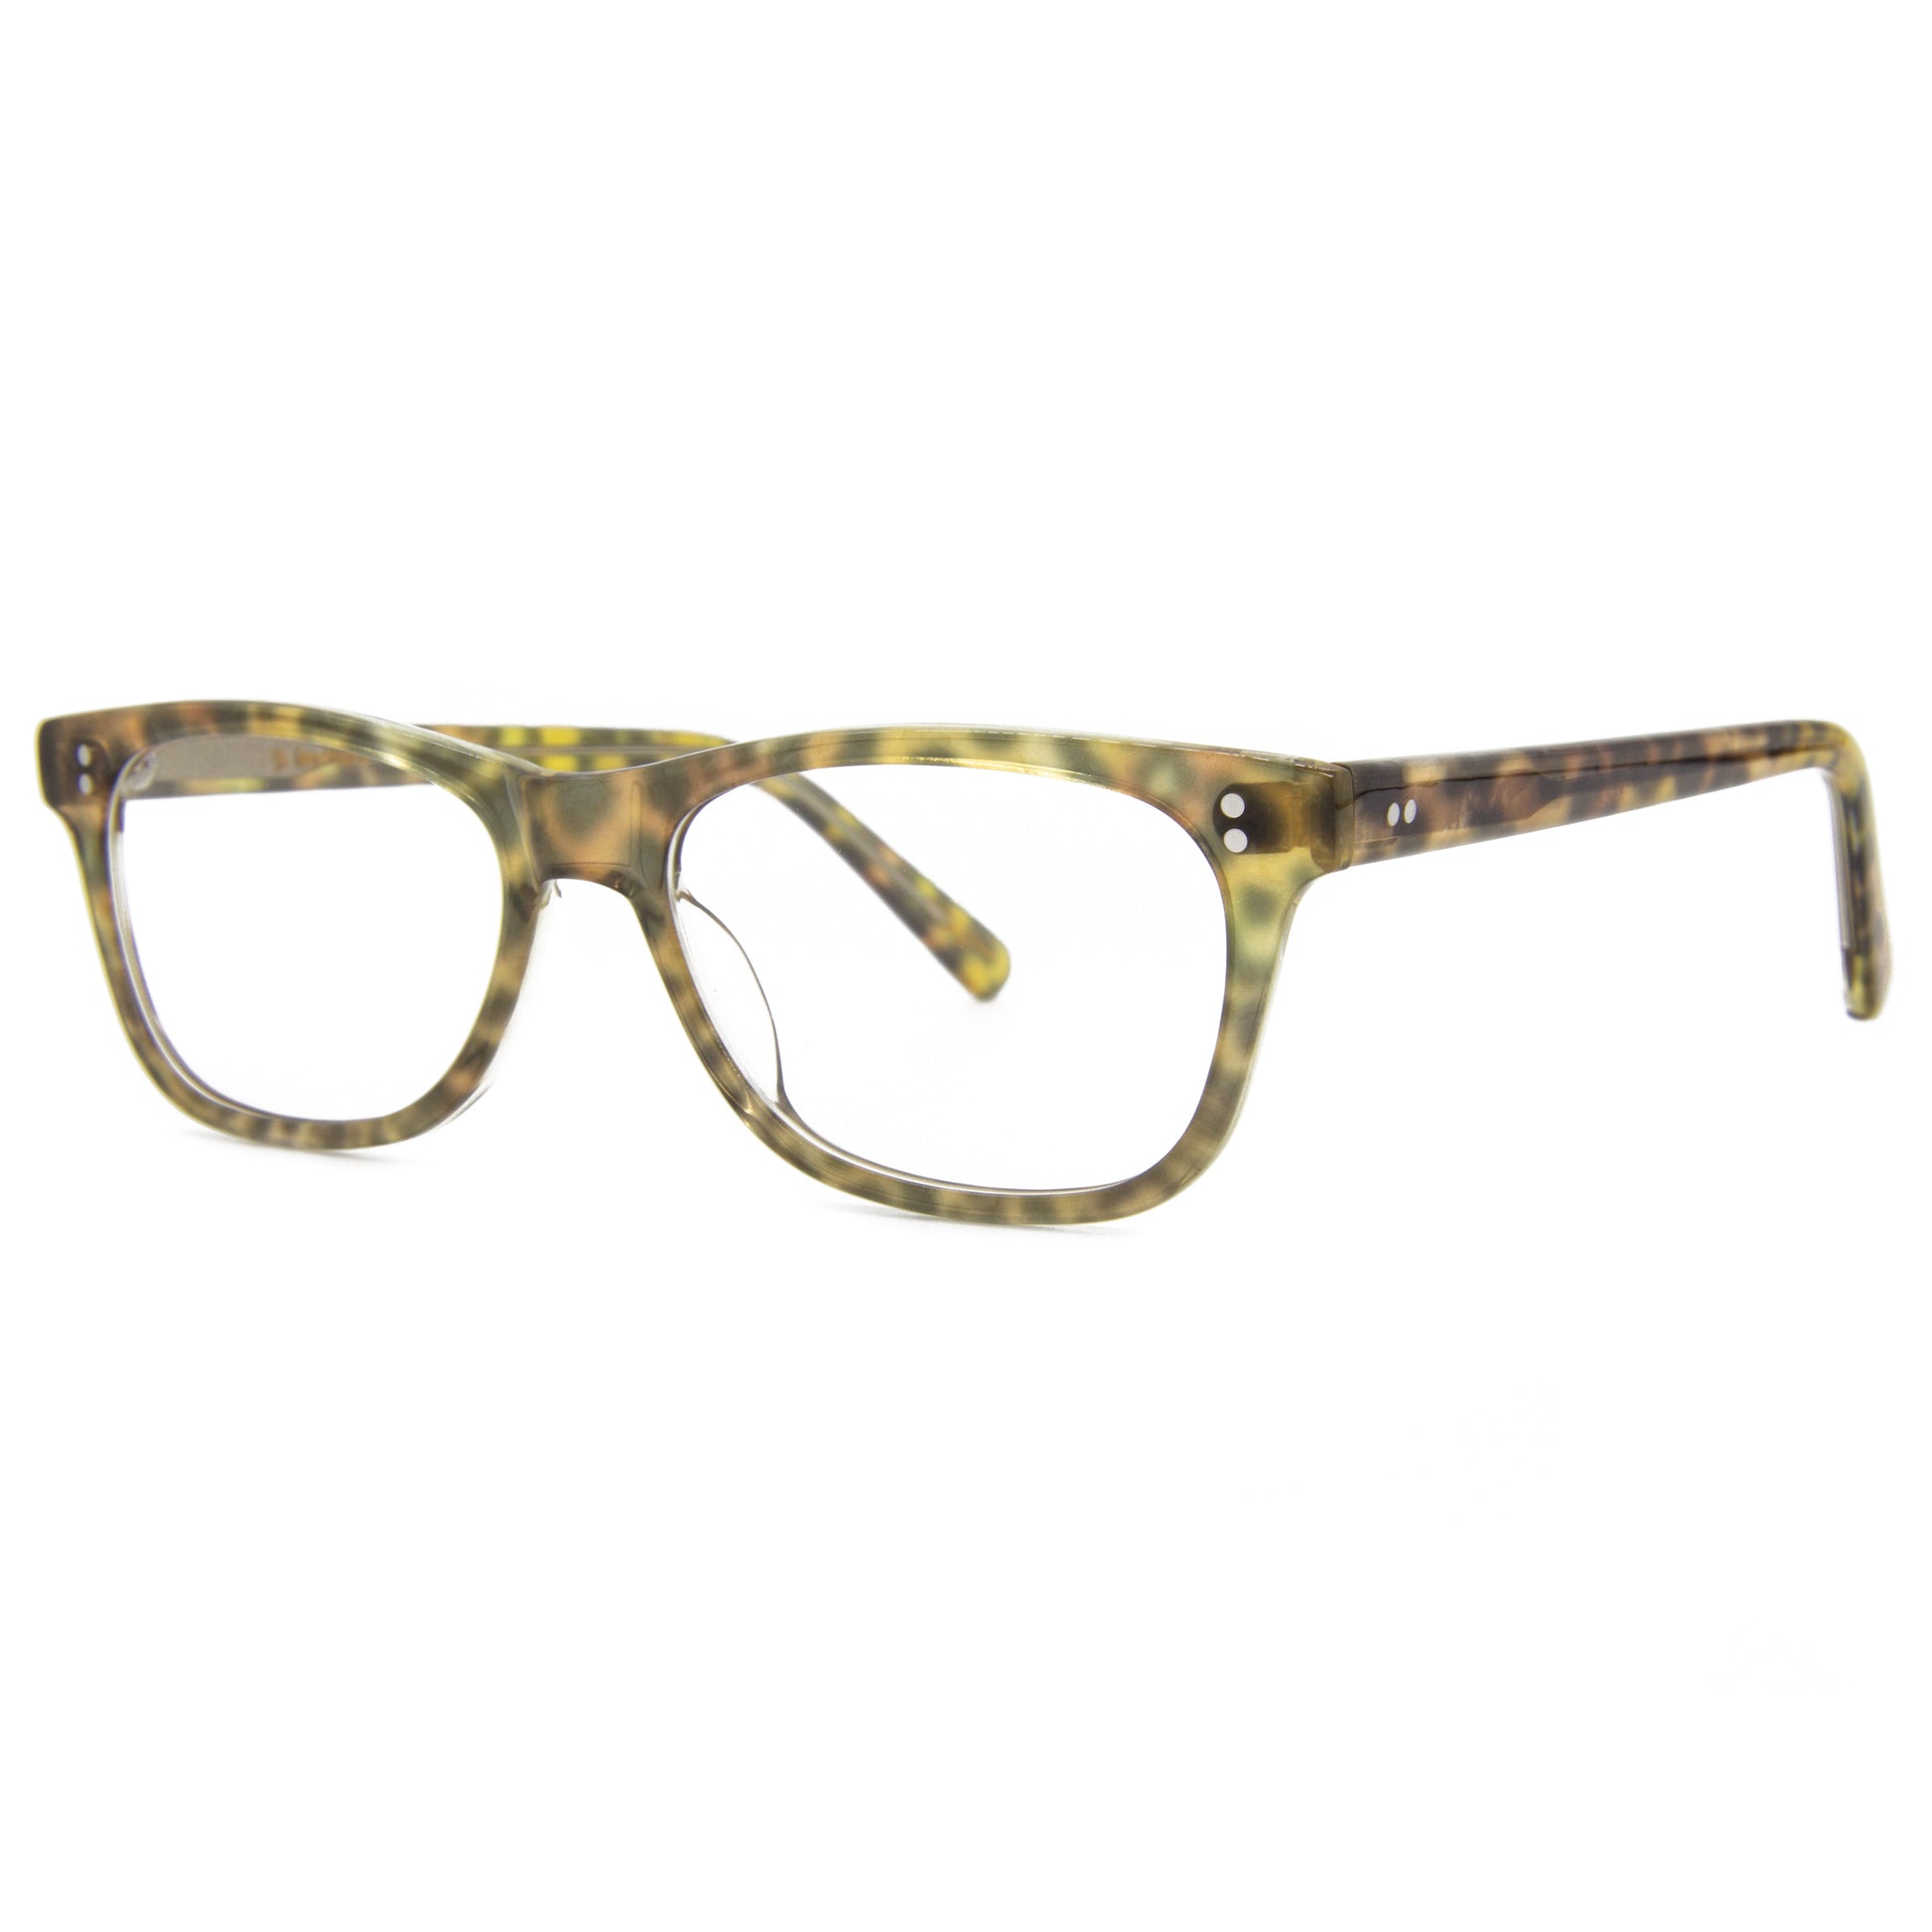 3 brothers - Mish - Leopard - Prescription Glasses - Side